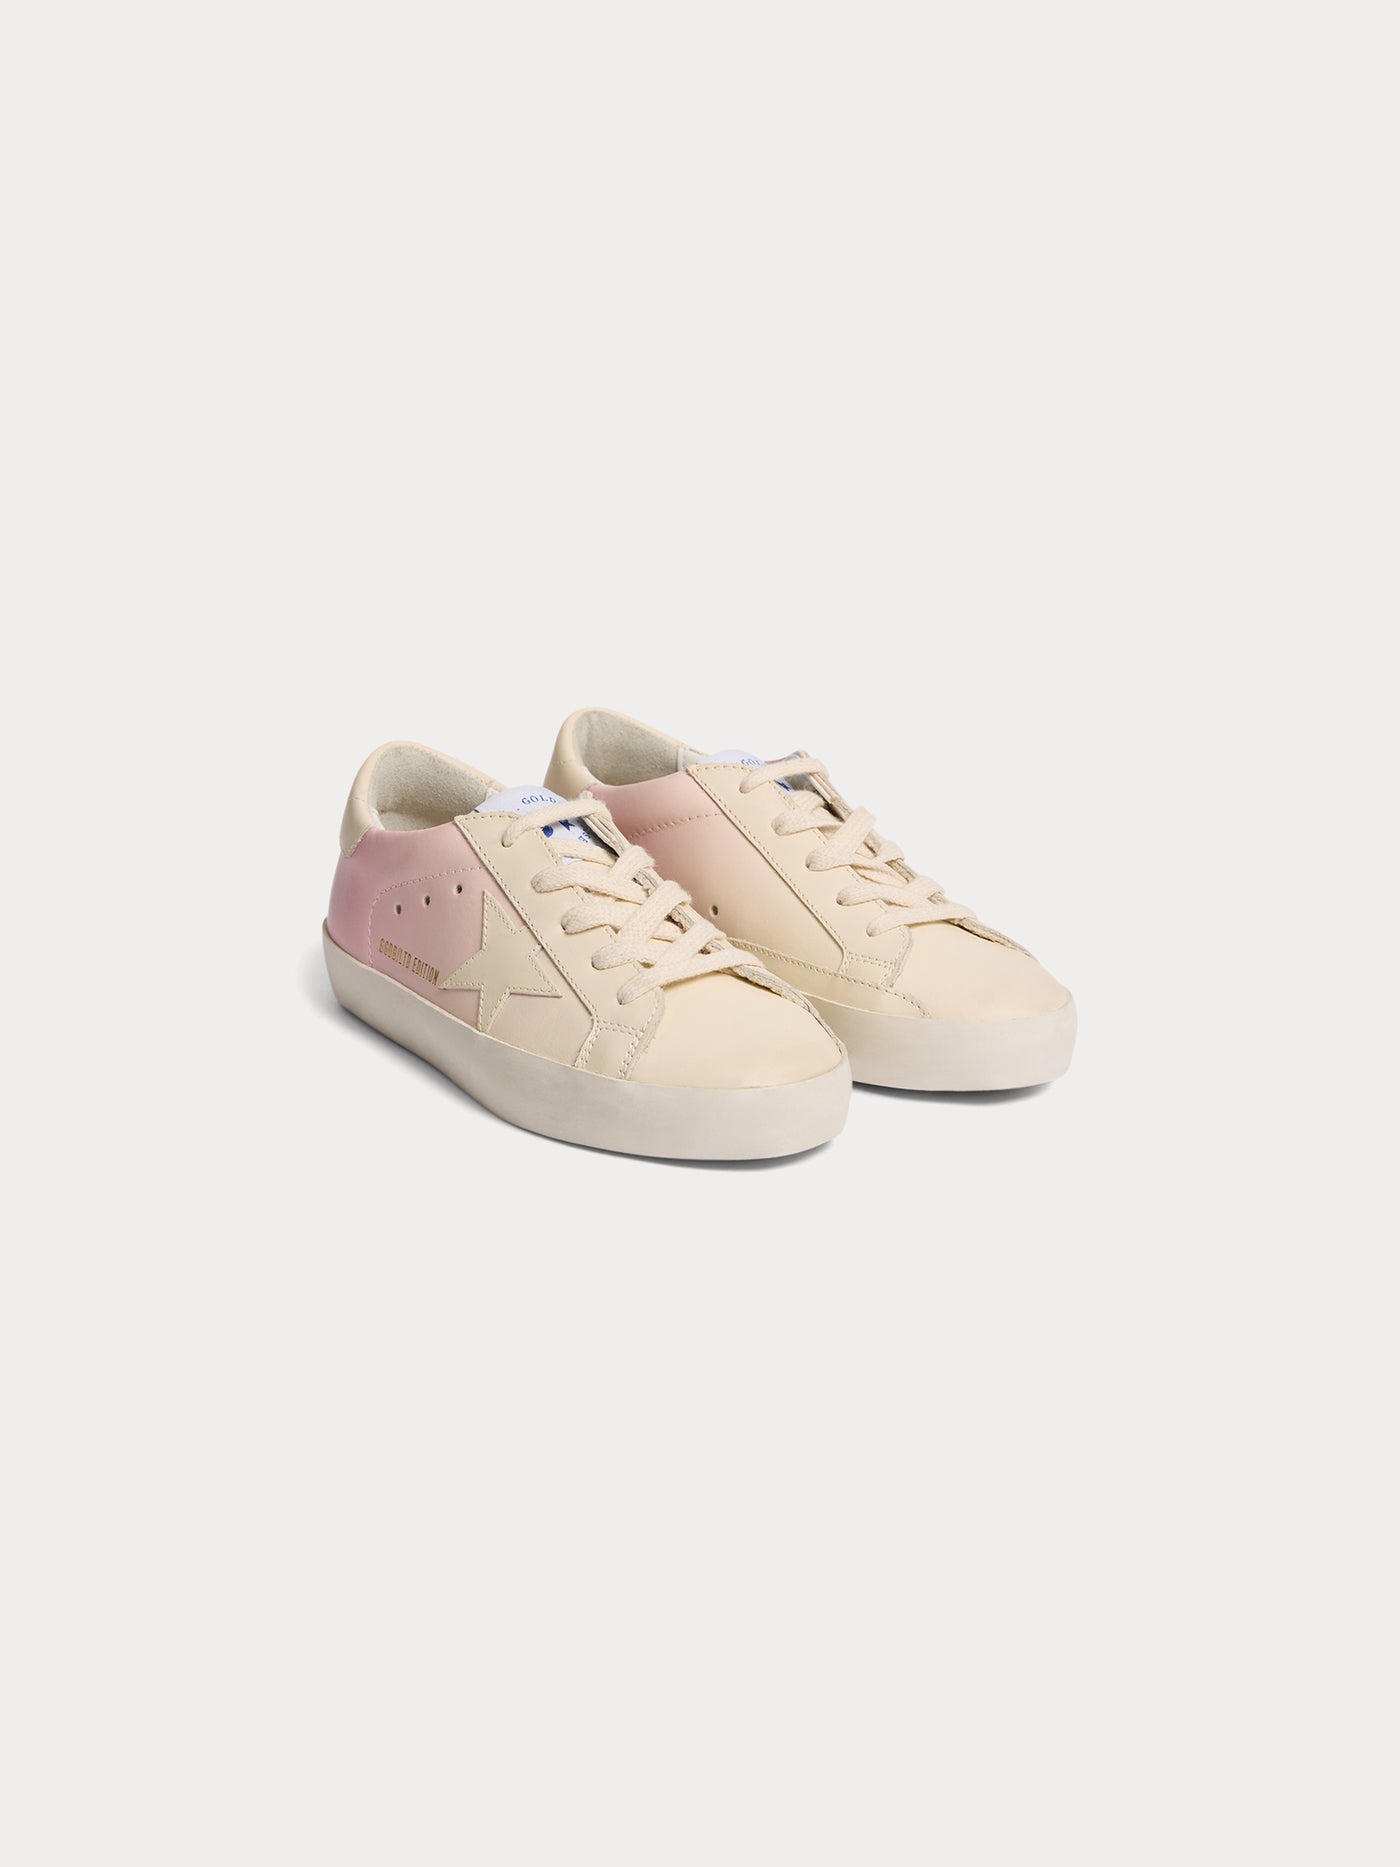 Golden Goose x Bonpoint Sneakers strawberry